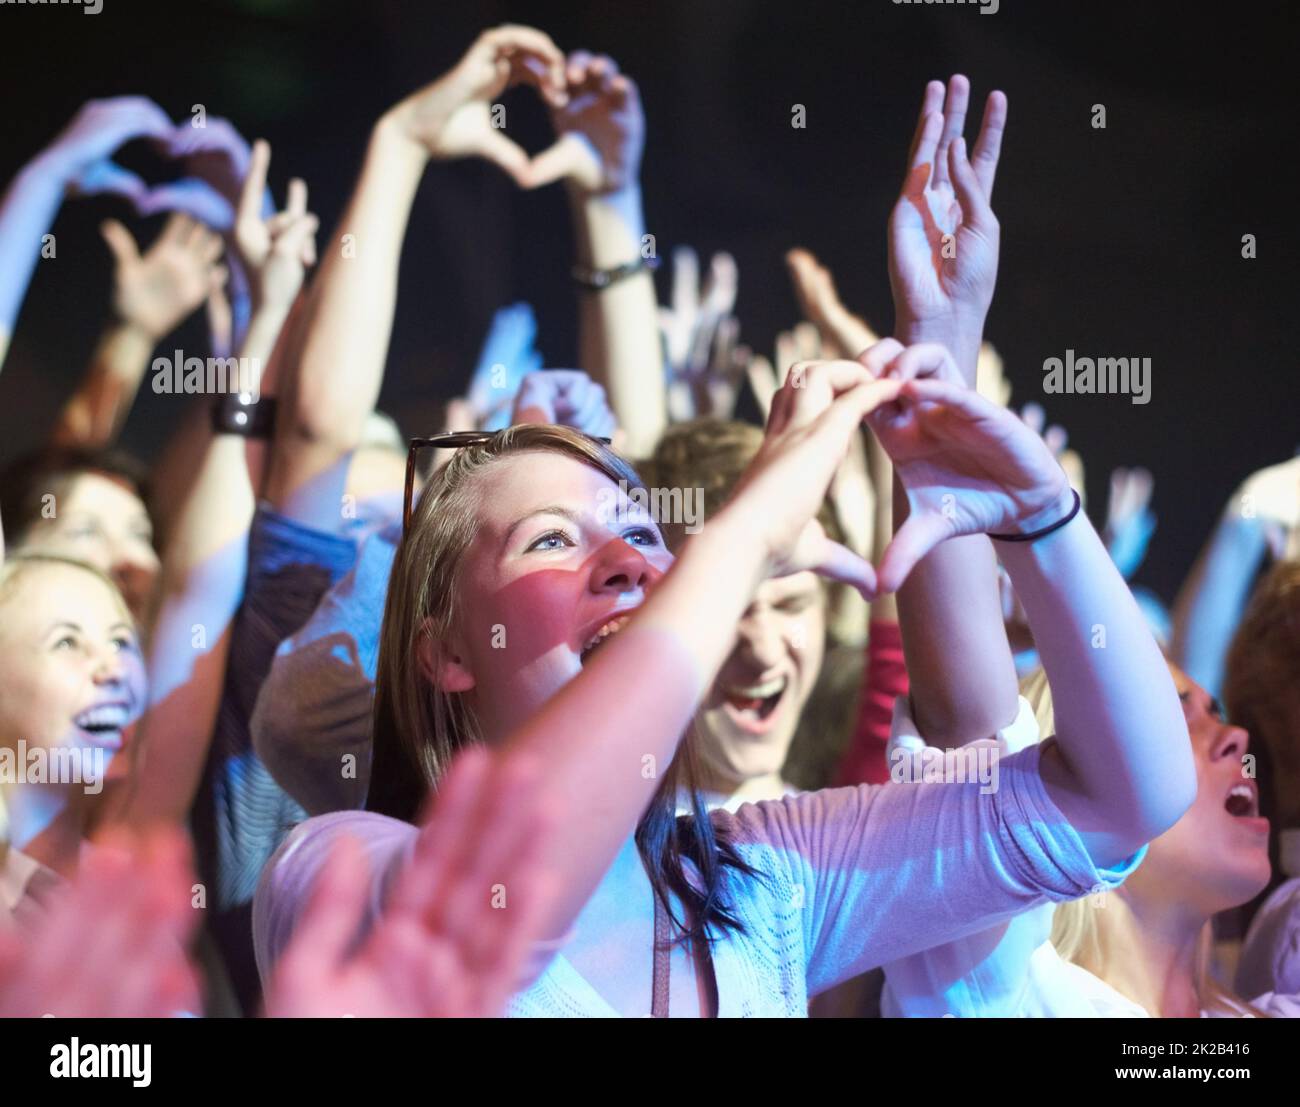 We love you. Adoring fans enjoying a music concert. Stock Photo